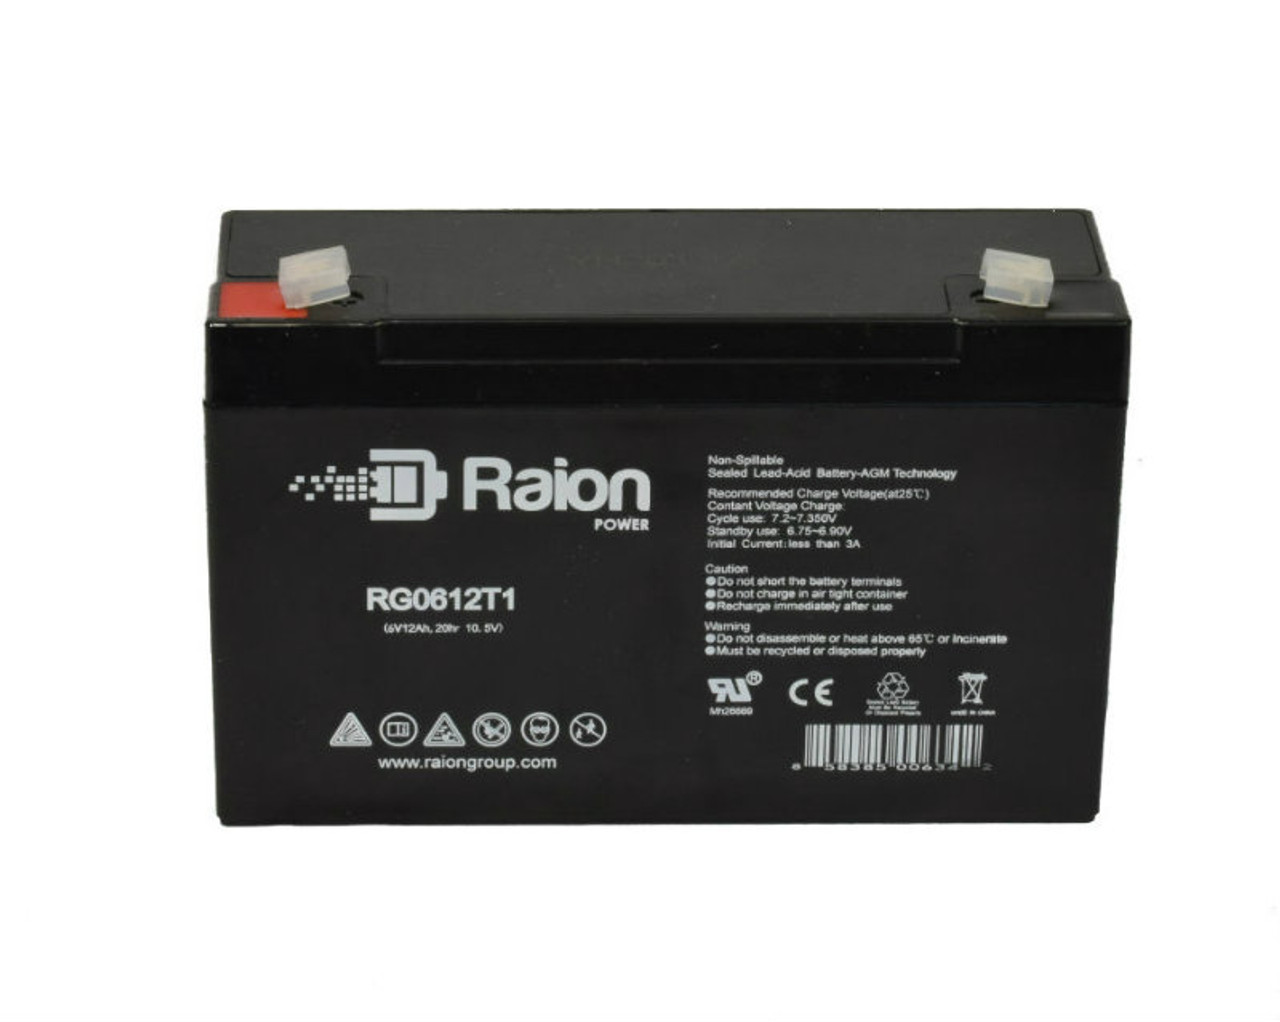 Raion Power RG06120T1 SLA Battery for Palma PM12A-6